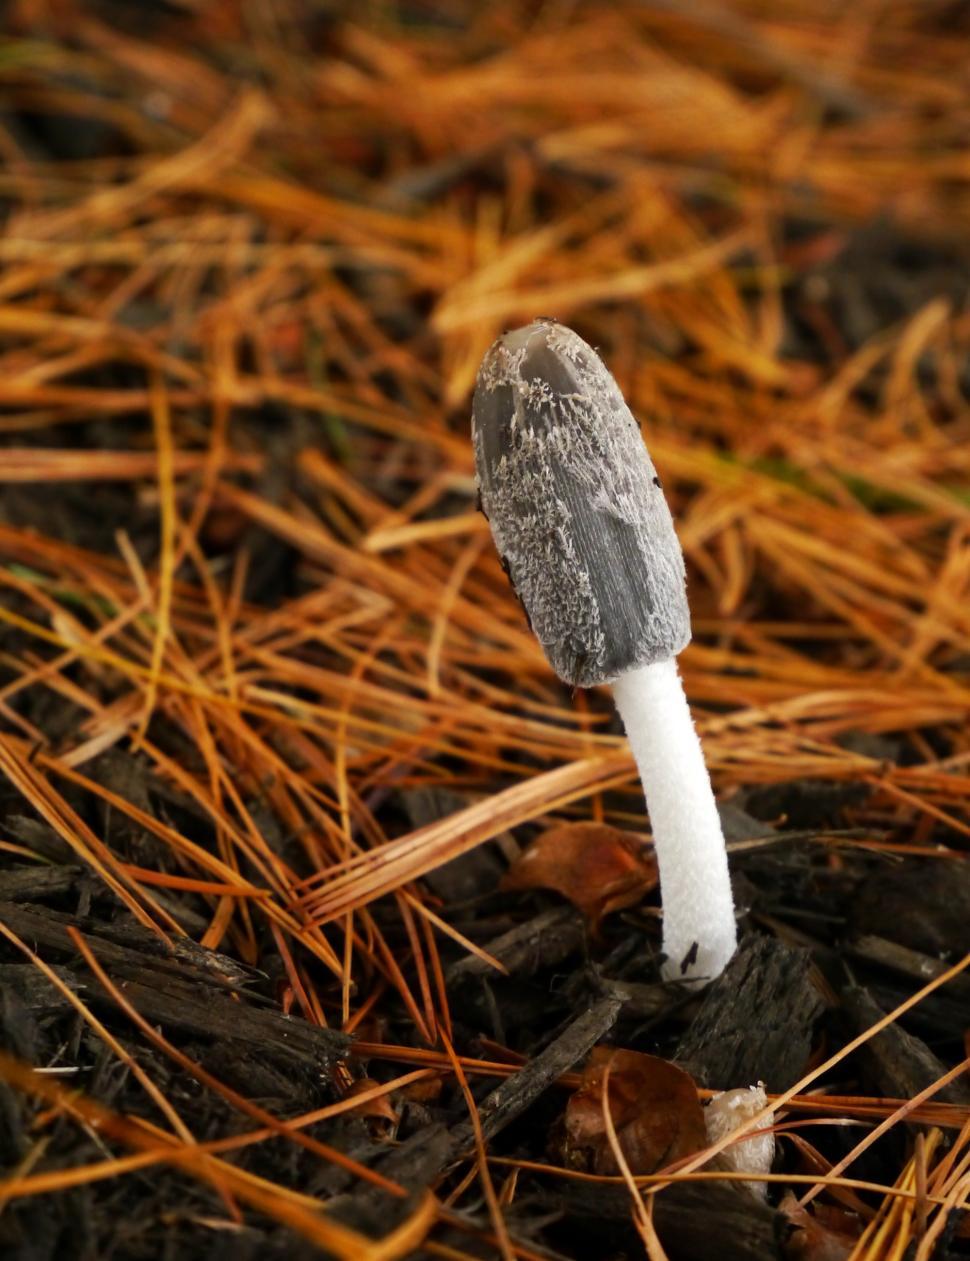 Free Image of Mushroom And Pine Needles 